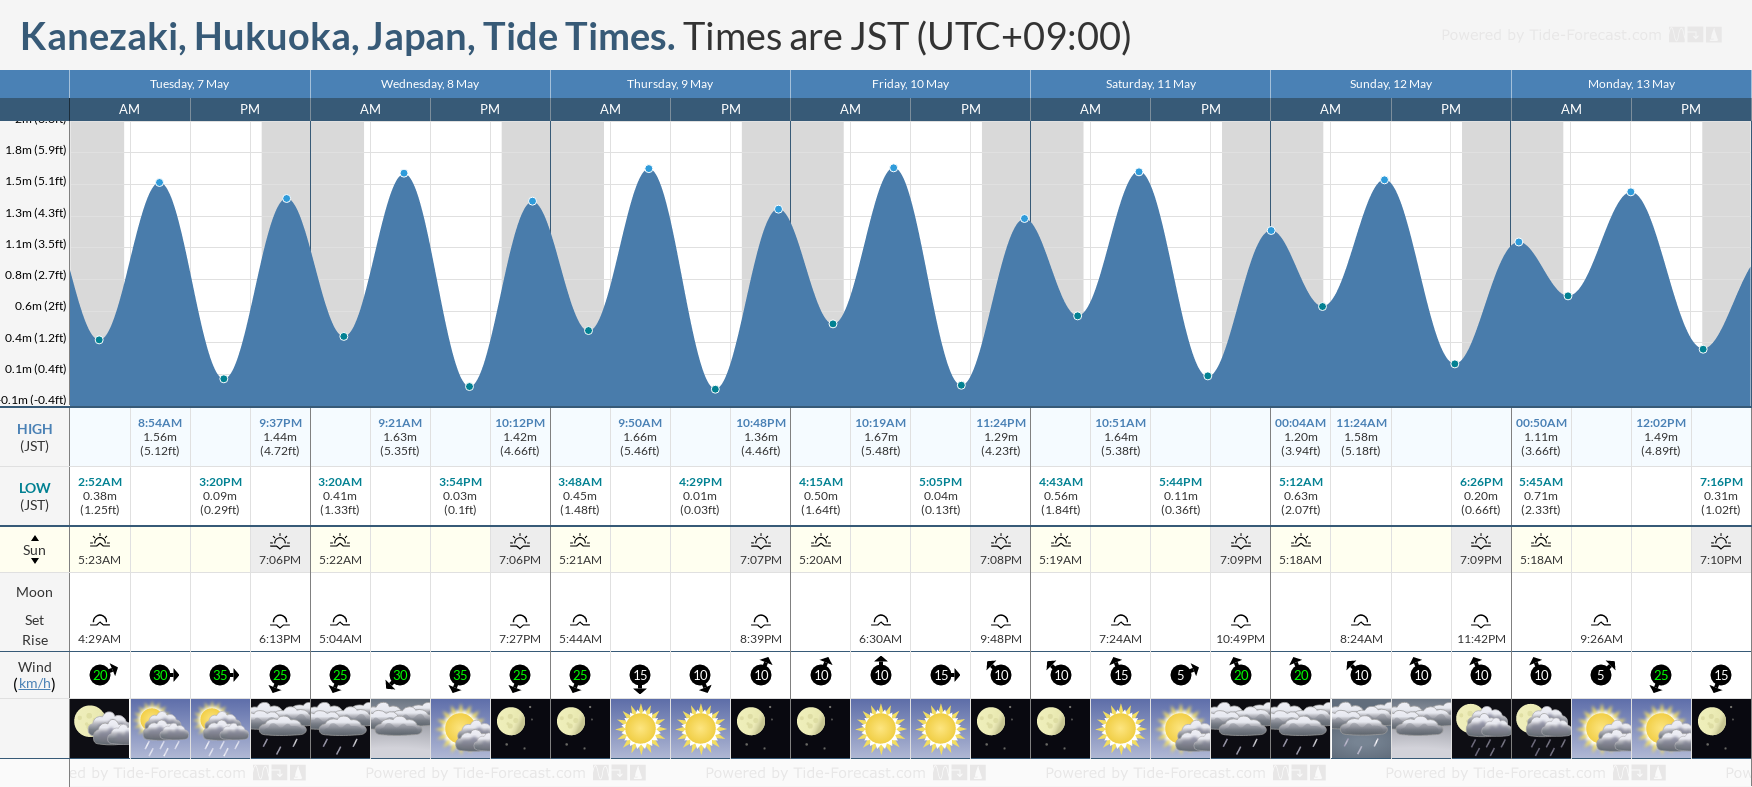 Kanezaki, Hukuoka, Japan Tide Chart including high and low tide tide times for the next 7 days